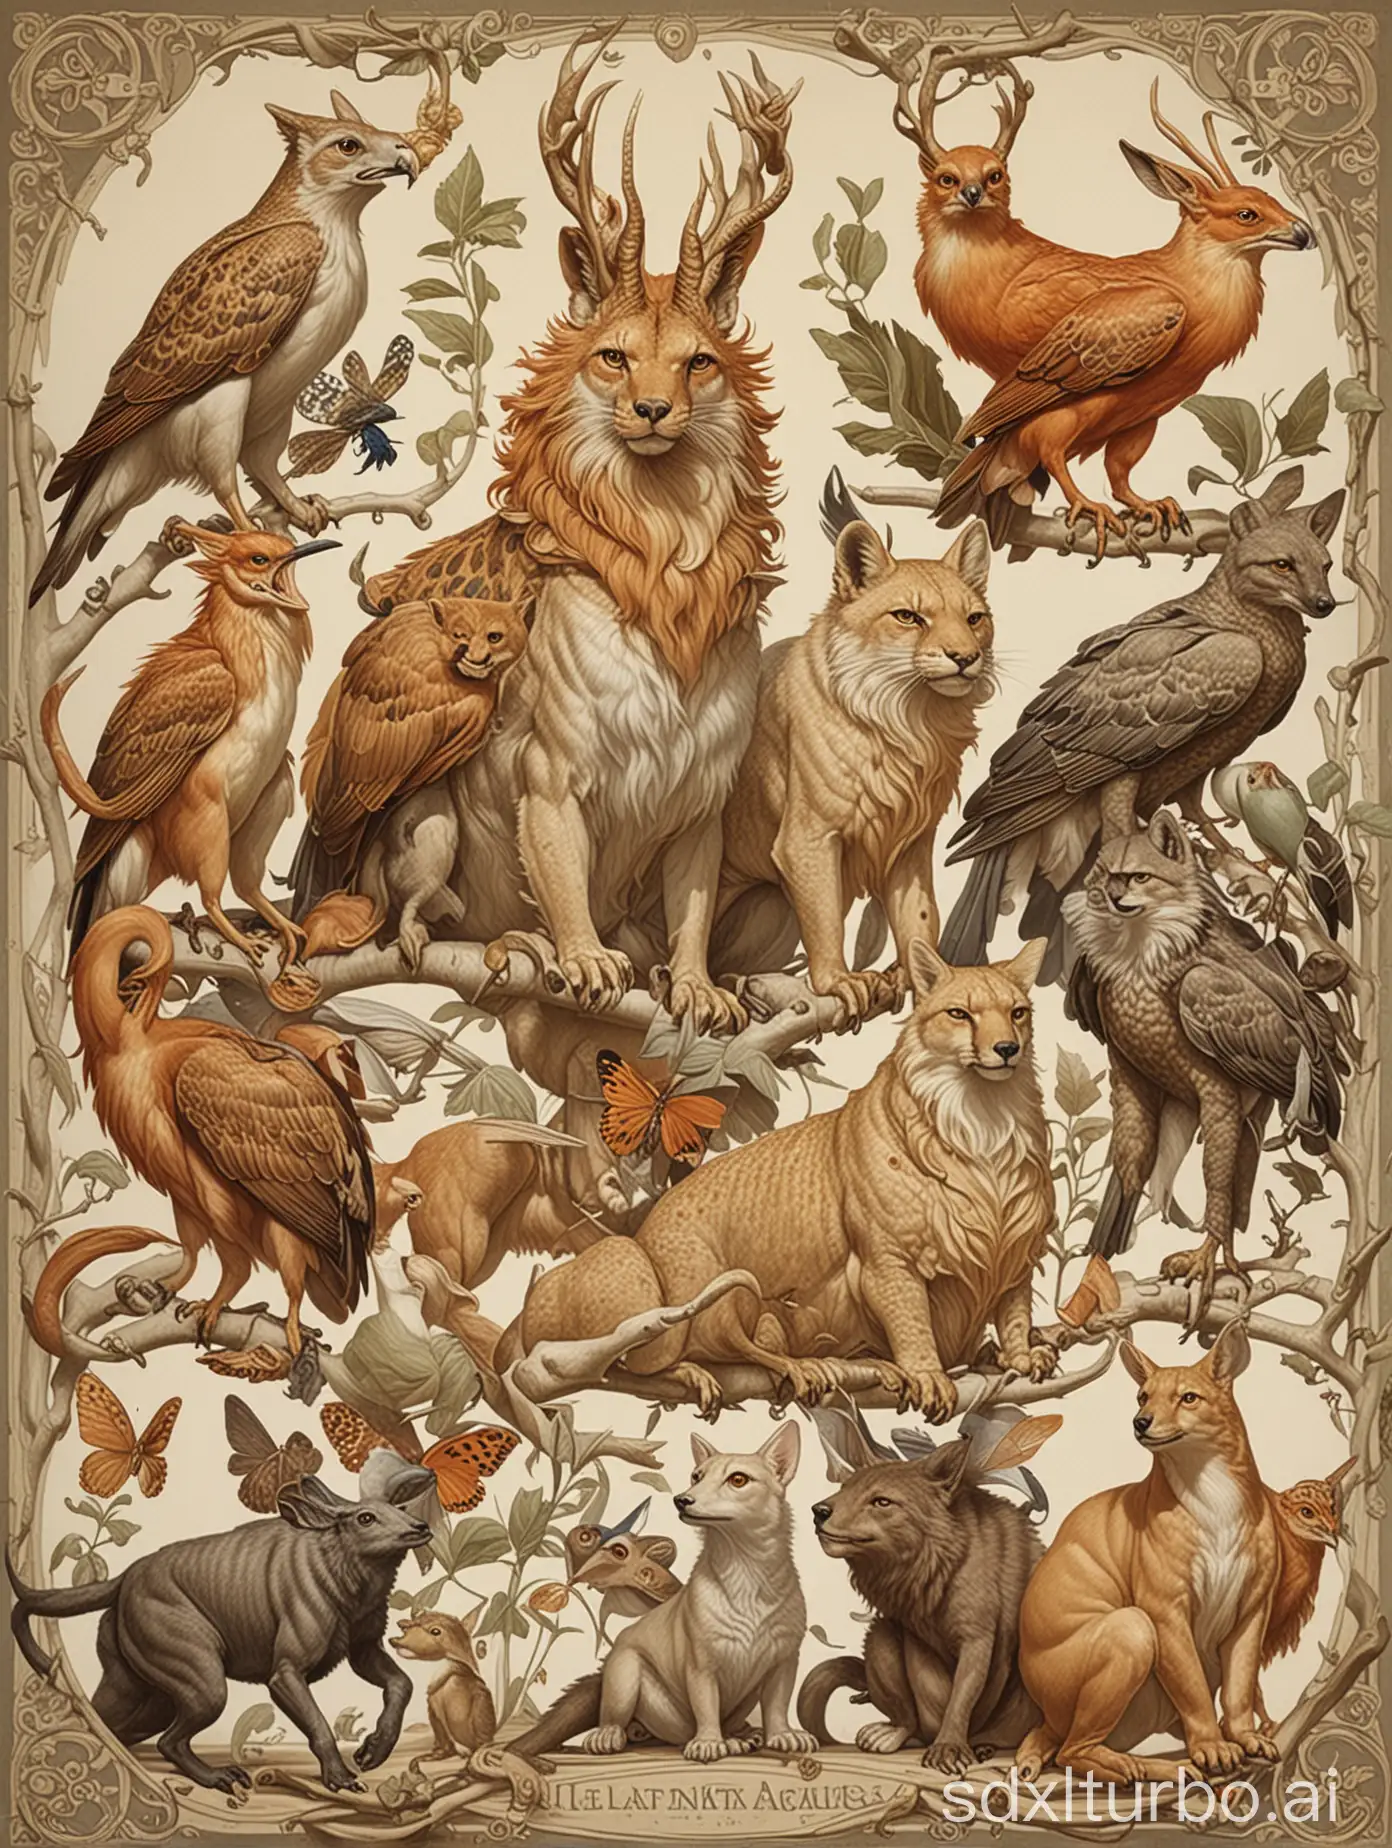 natural history illustration of various fantasy animal hybrids in Leyendecker illustration style